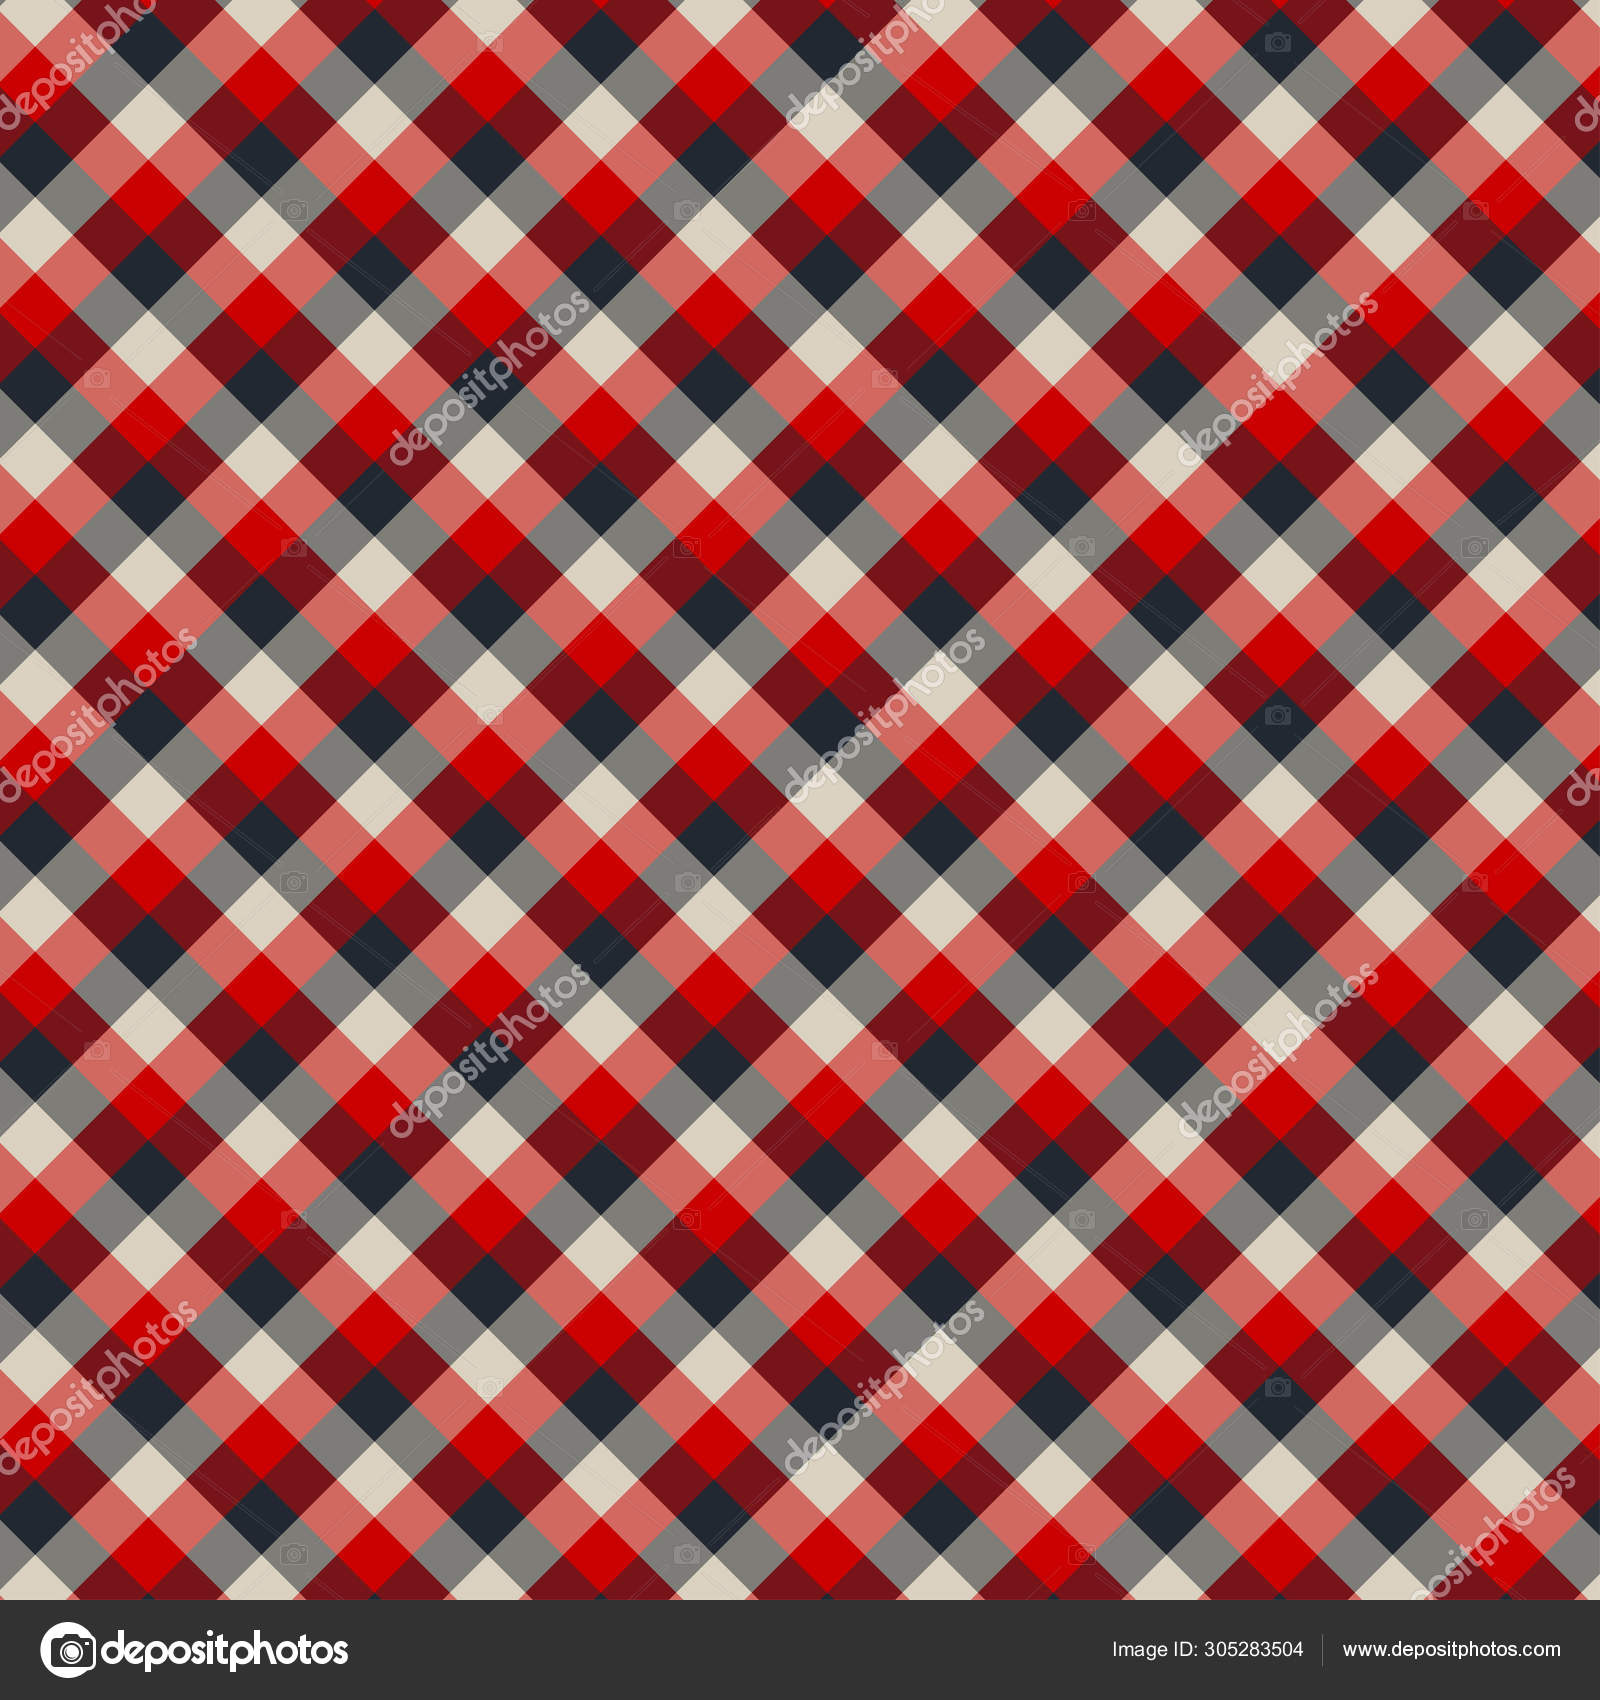 Conjunto de vetor de tecido sem costura têxtil xadrez xadrez fundo padrão  textura tartan